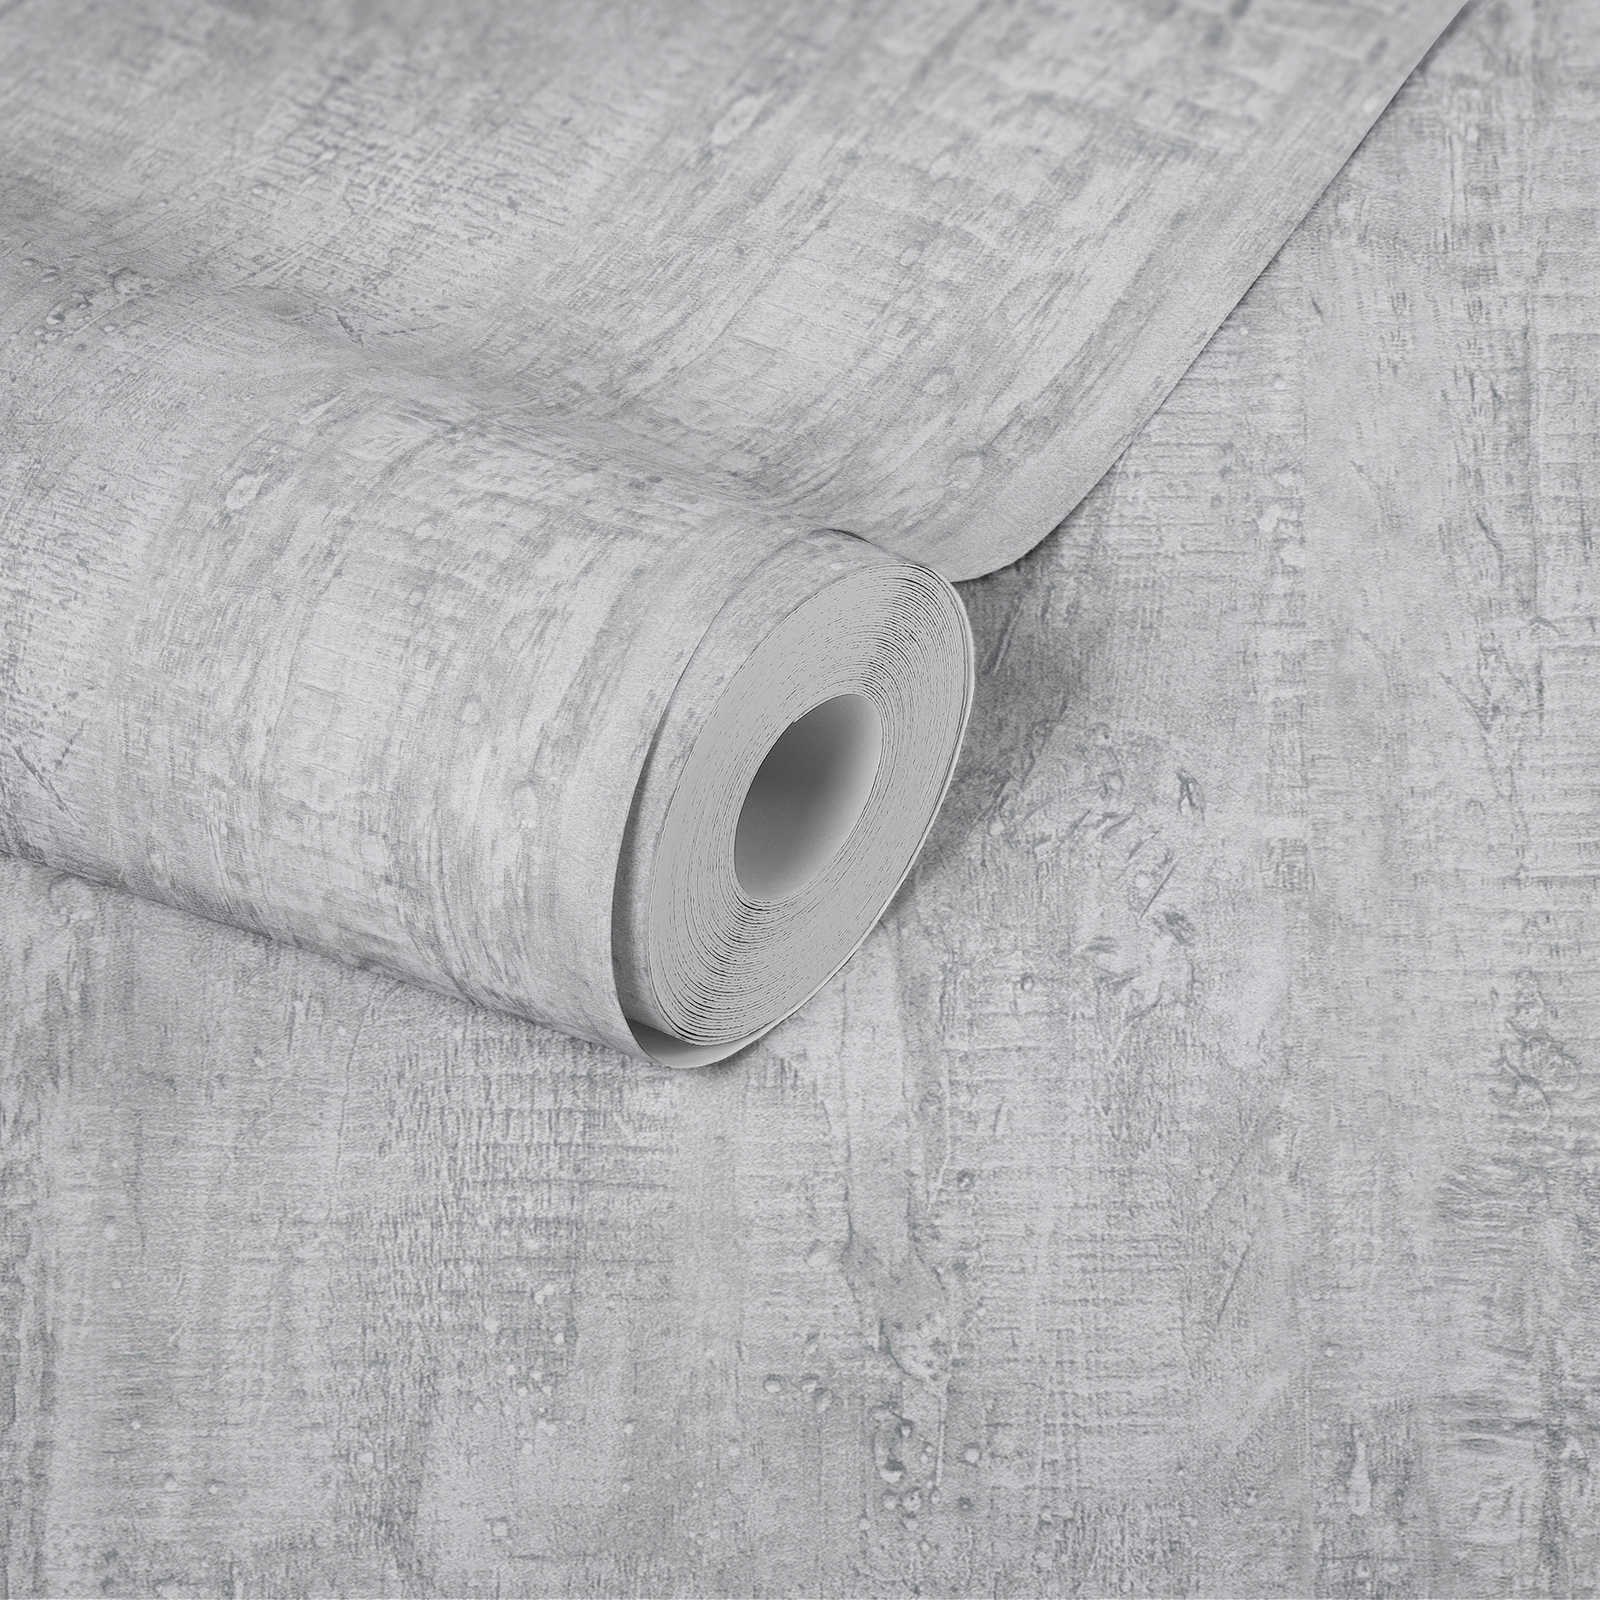             Tapete in rustikaler Betonoptik für Industrielles Design – Grau
        